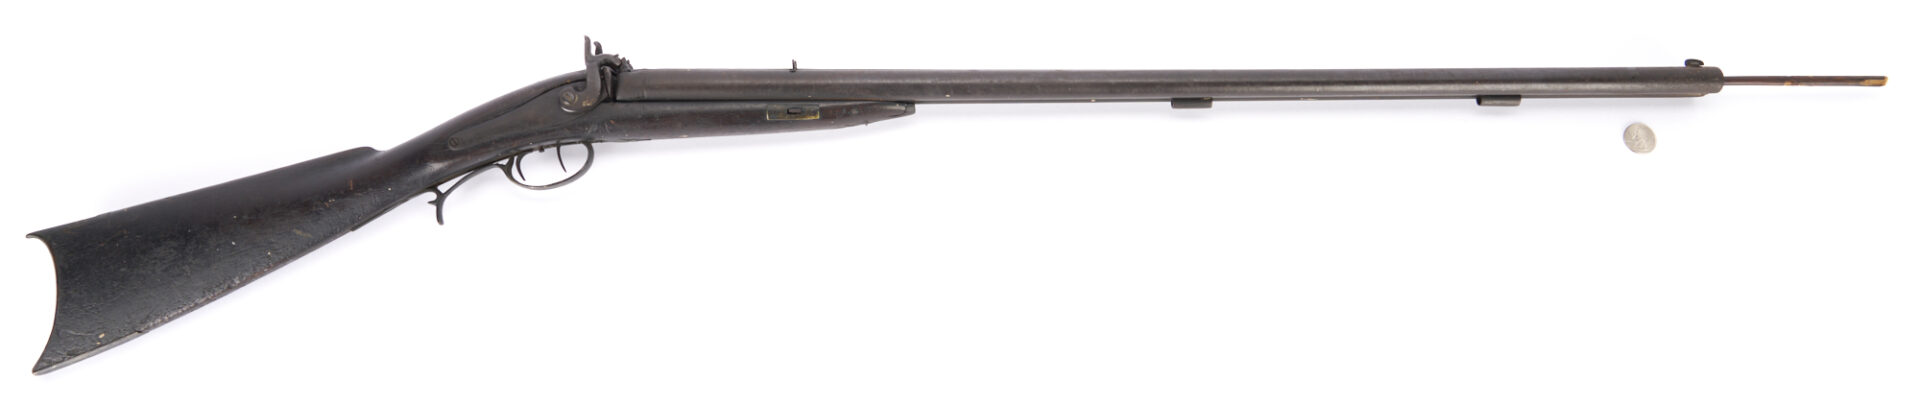 Lot 530: Combination Percussion Rifle/Shotgun; DeLong & Son, Chattanooga; Walter Cline Collection